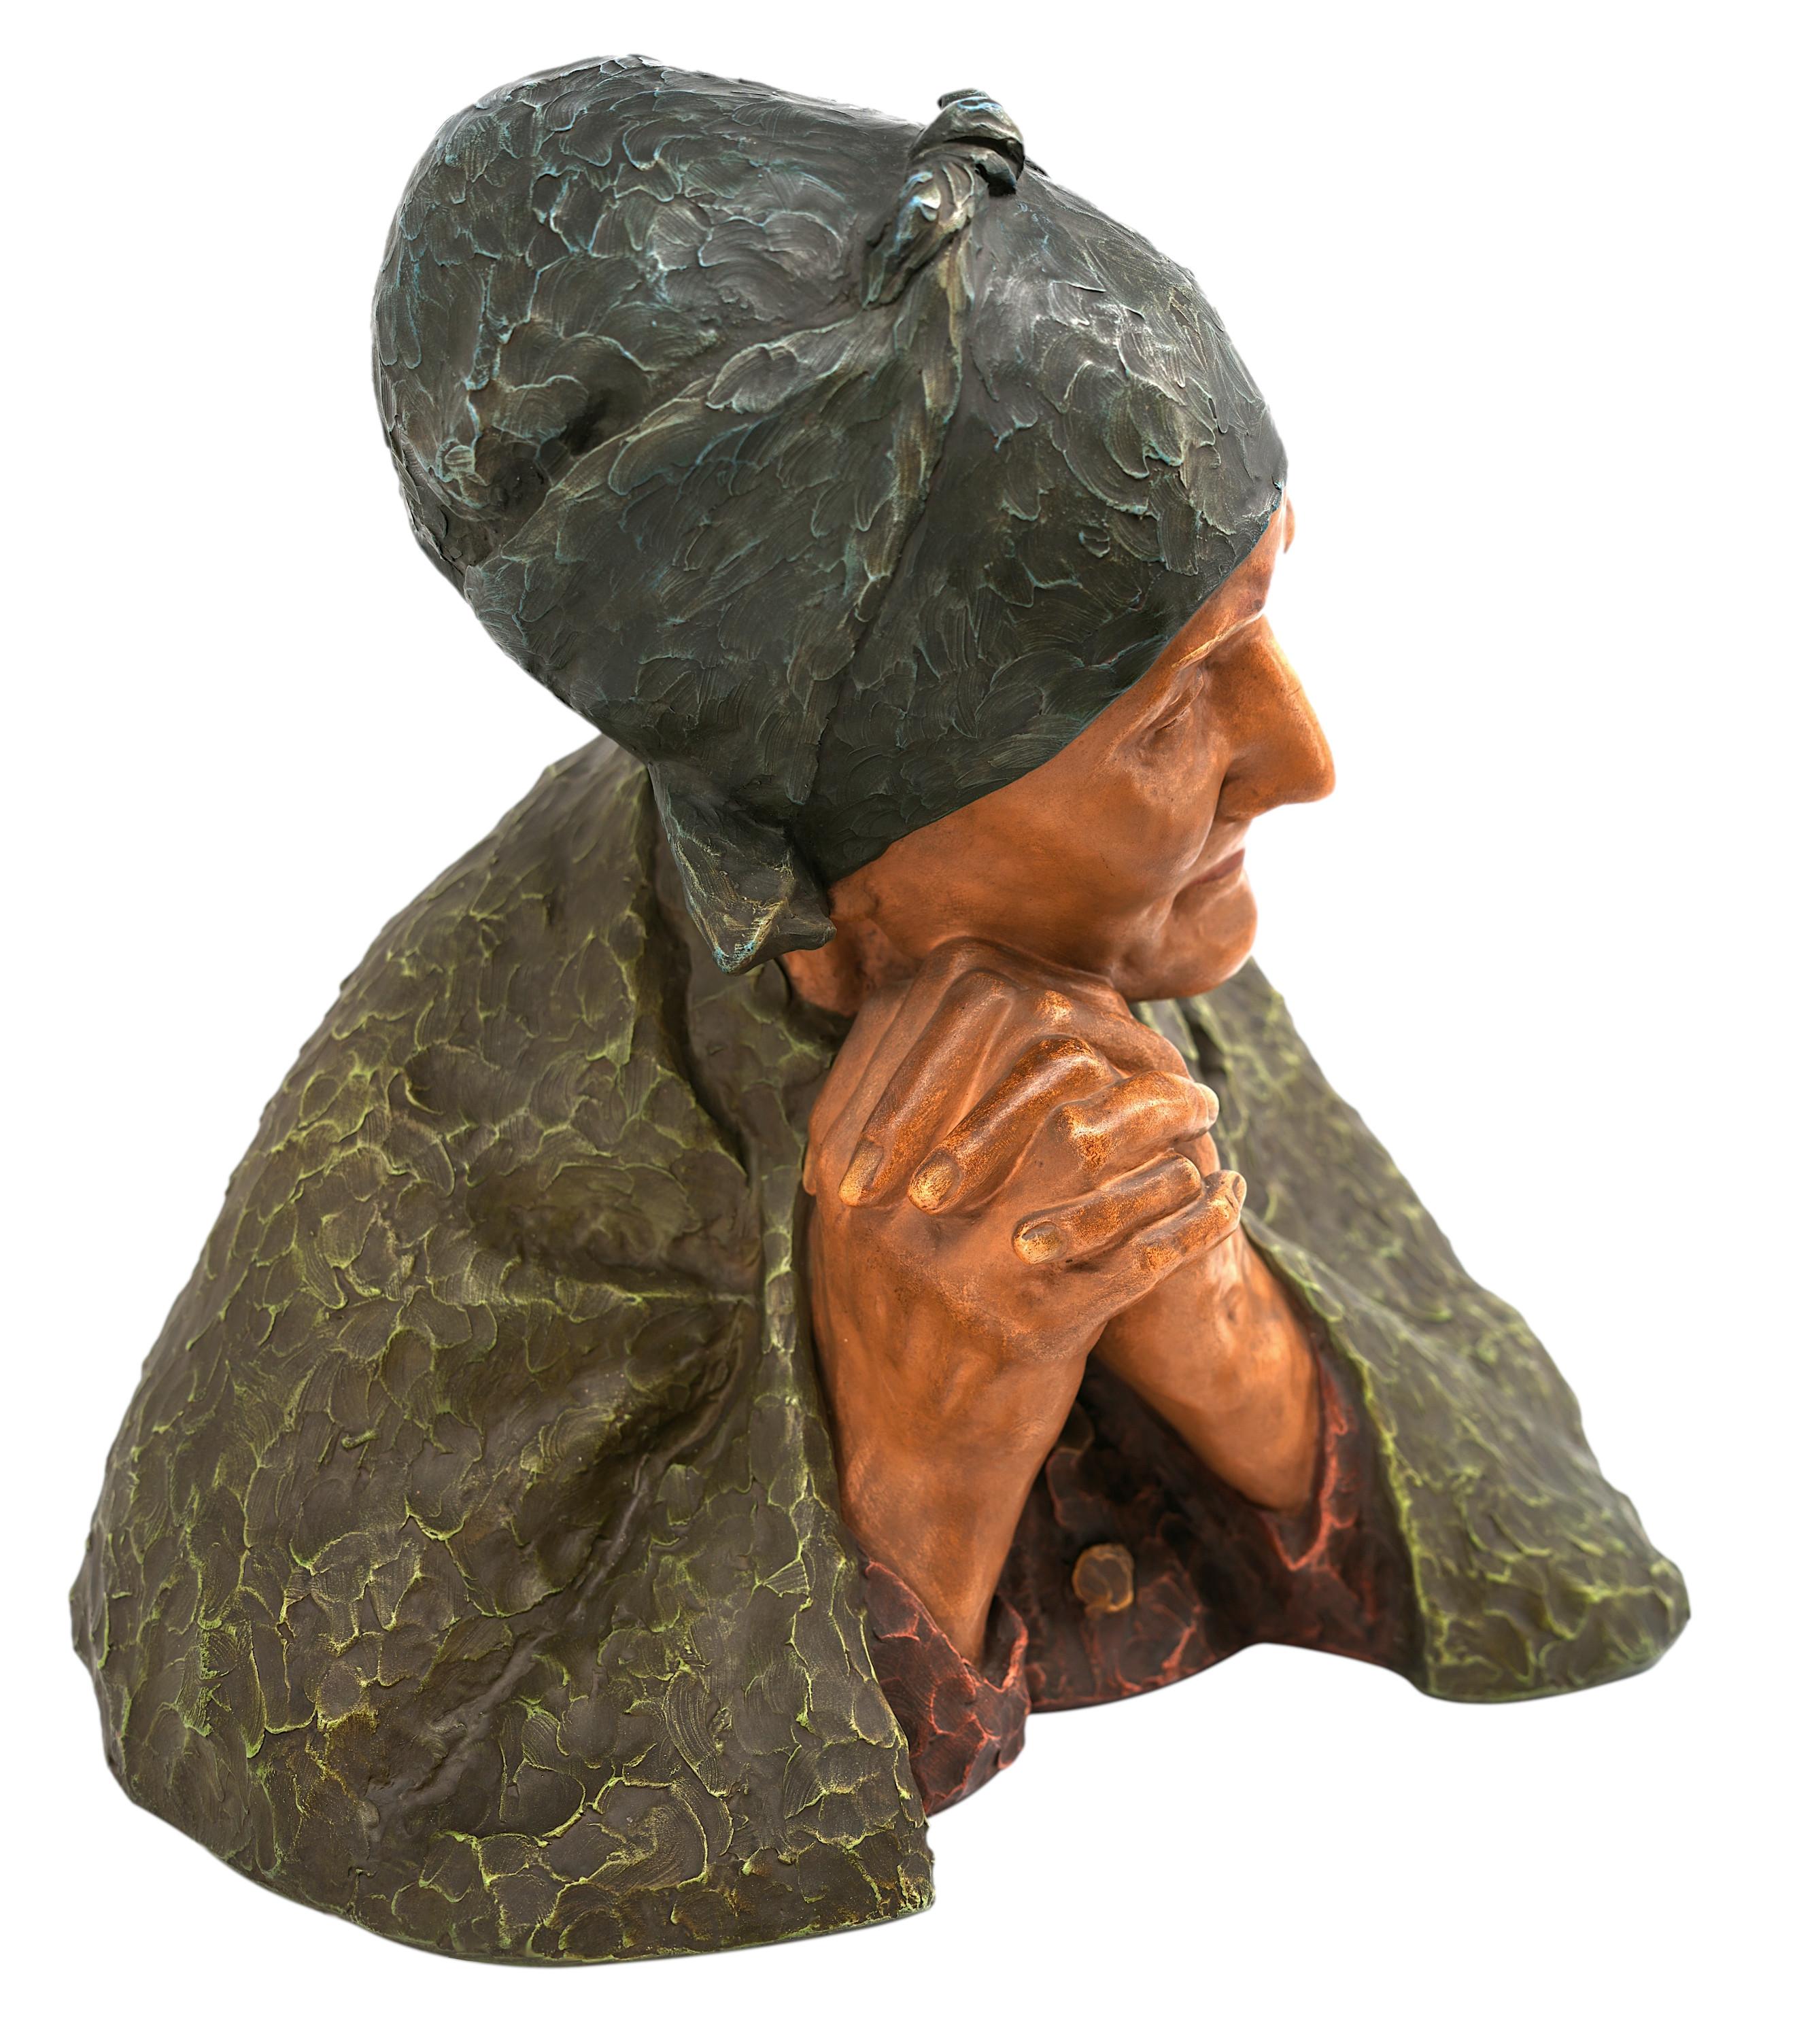 Polychromé Sculpture du buste de Berthe GIRARDET, vieille femme vieille femme, vers 1900 en vente